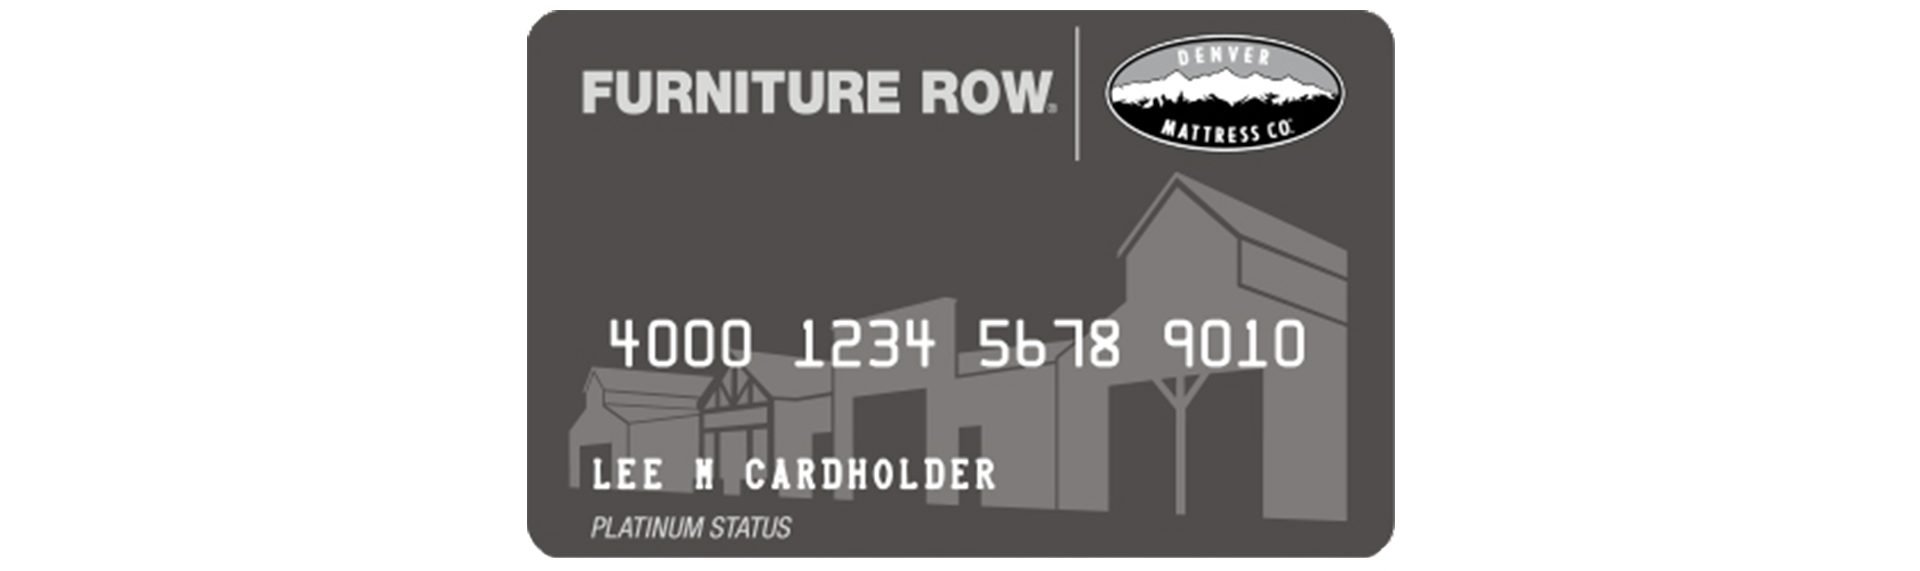 Furniture Row and Denver Mattress Credit Card